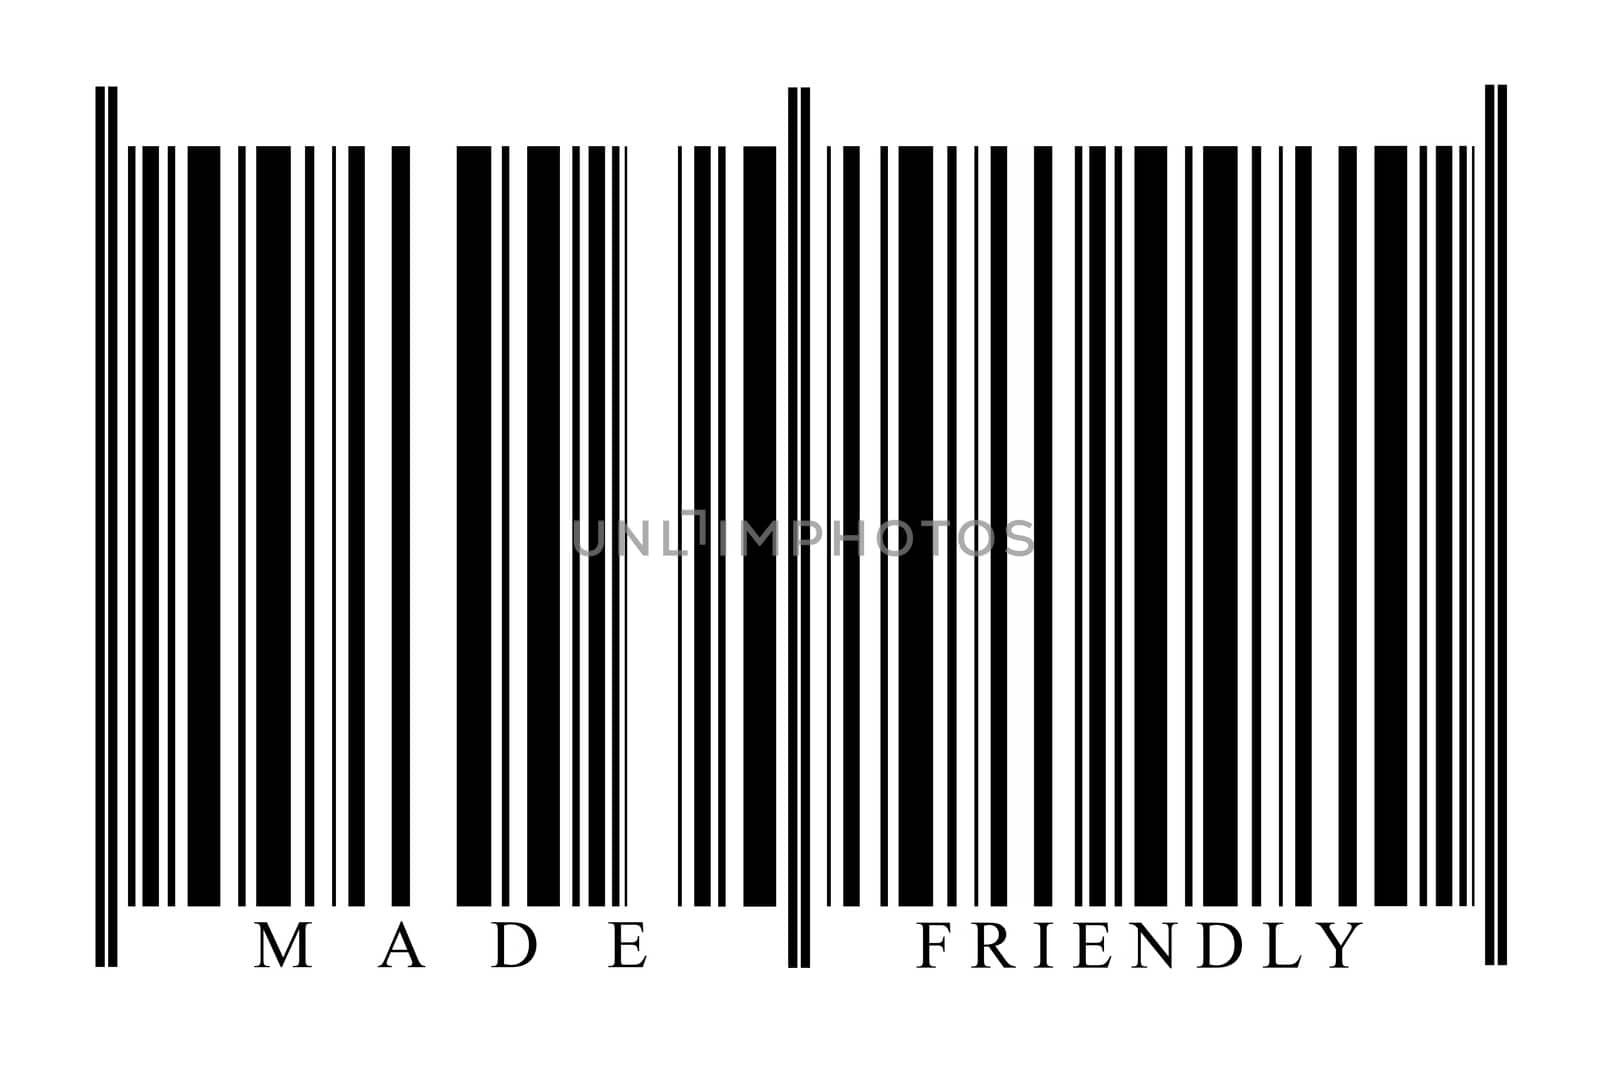 Friendly Barcode by gemenacom